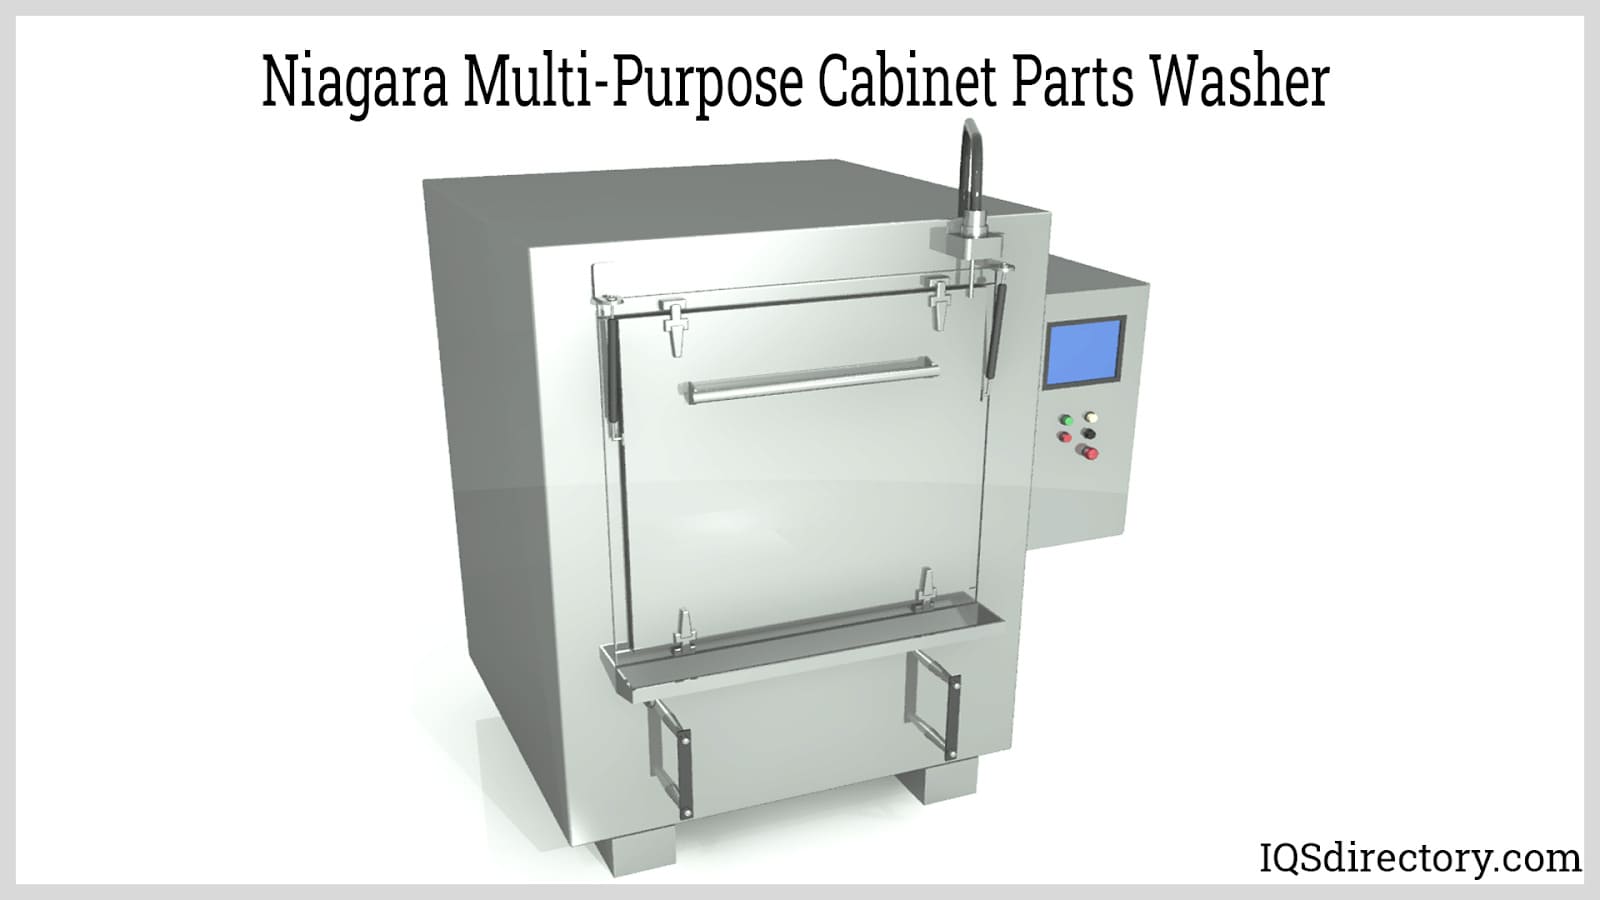 Niagara Multi-Purpose Cabinet Parts Washer